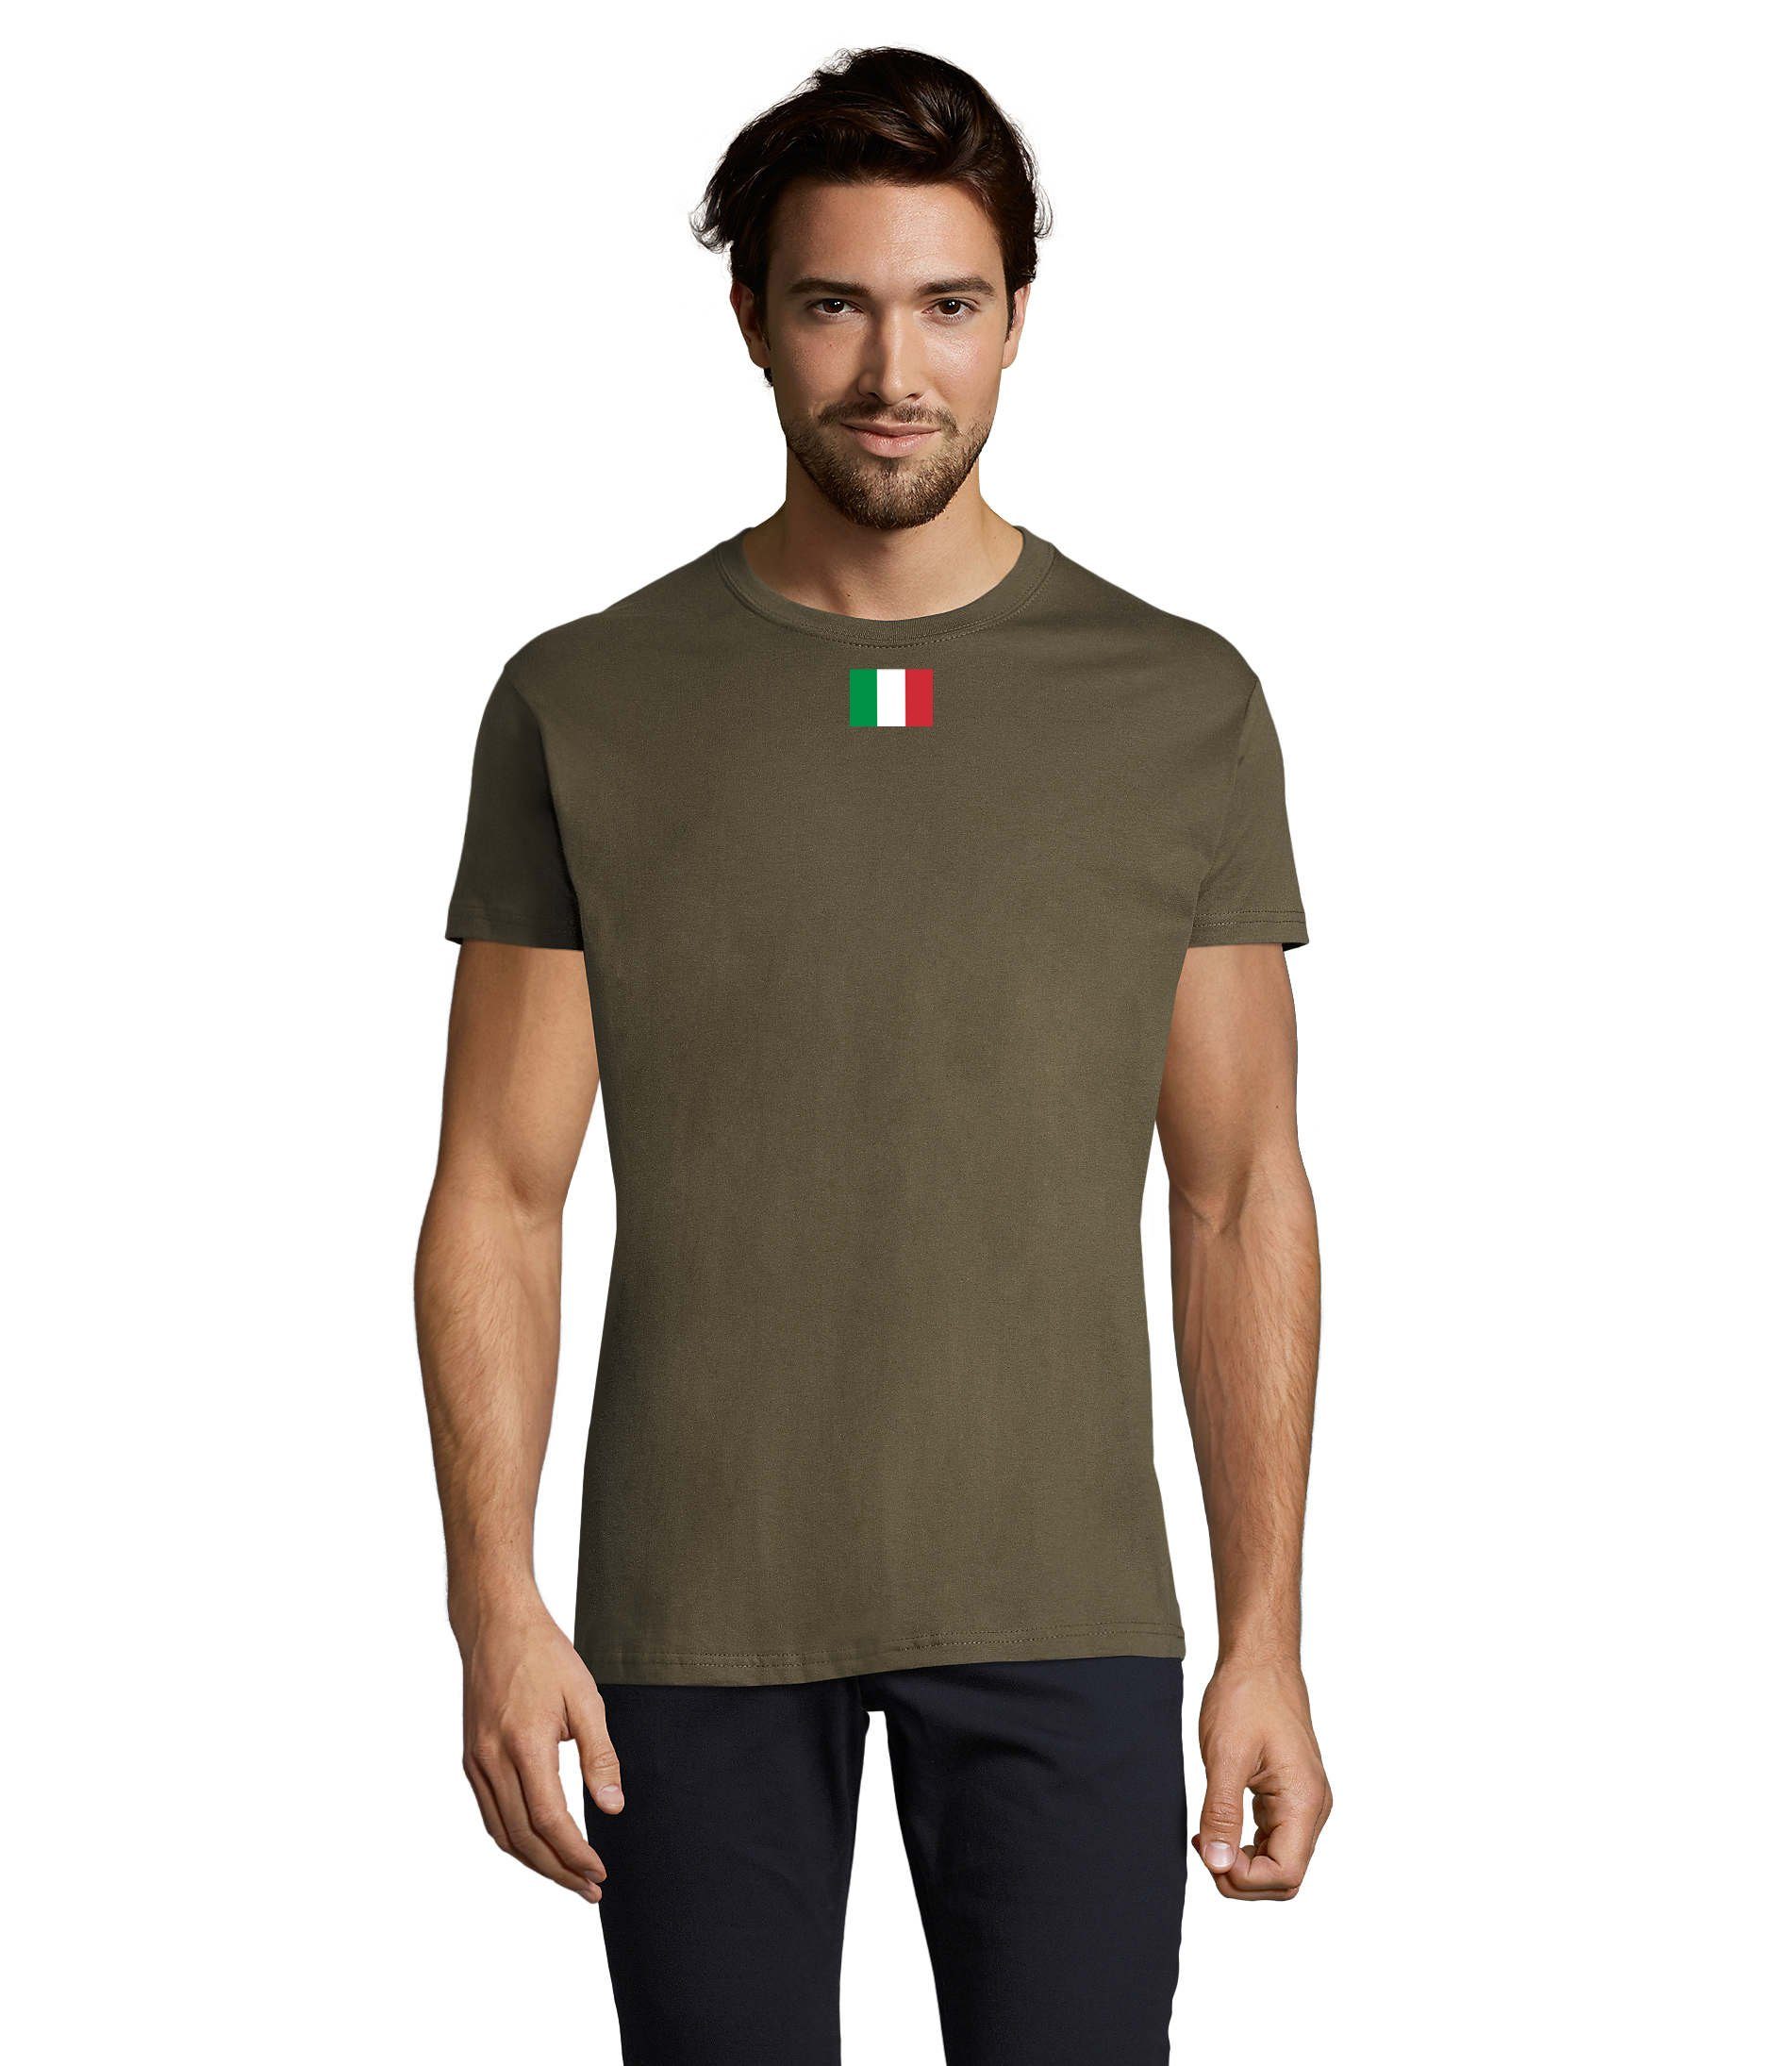 Force Nato Army USA Ukraine Armee T-Shirt Peace Brownie Blondie Italien & Herren Air